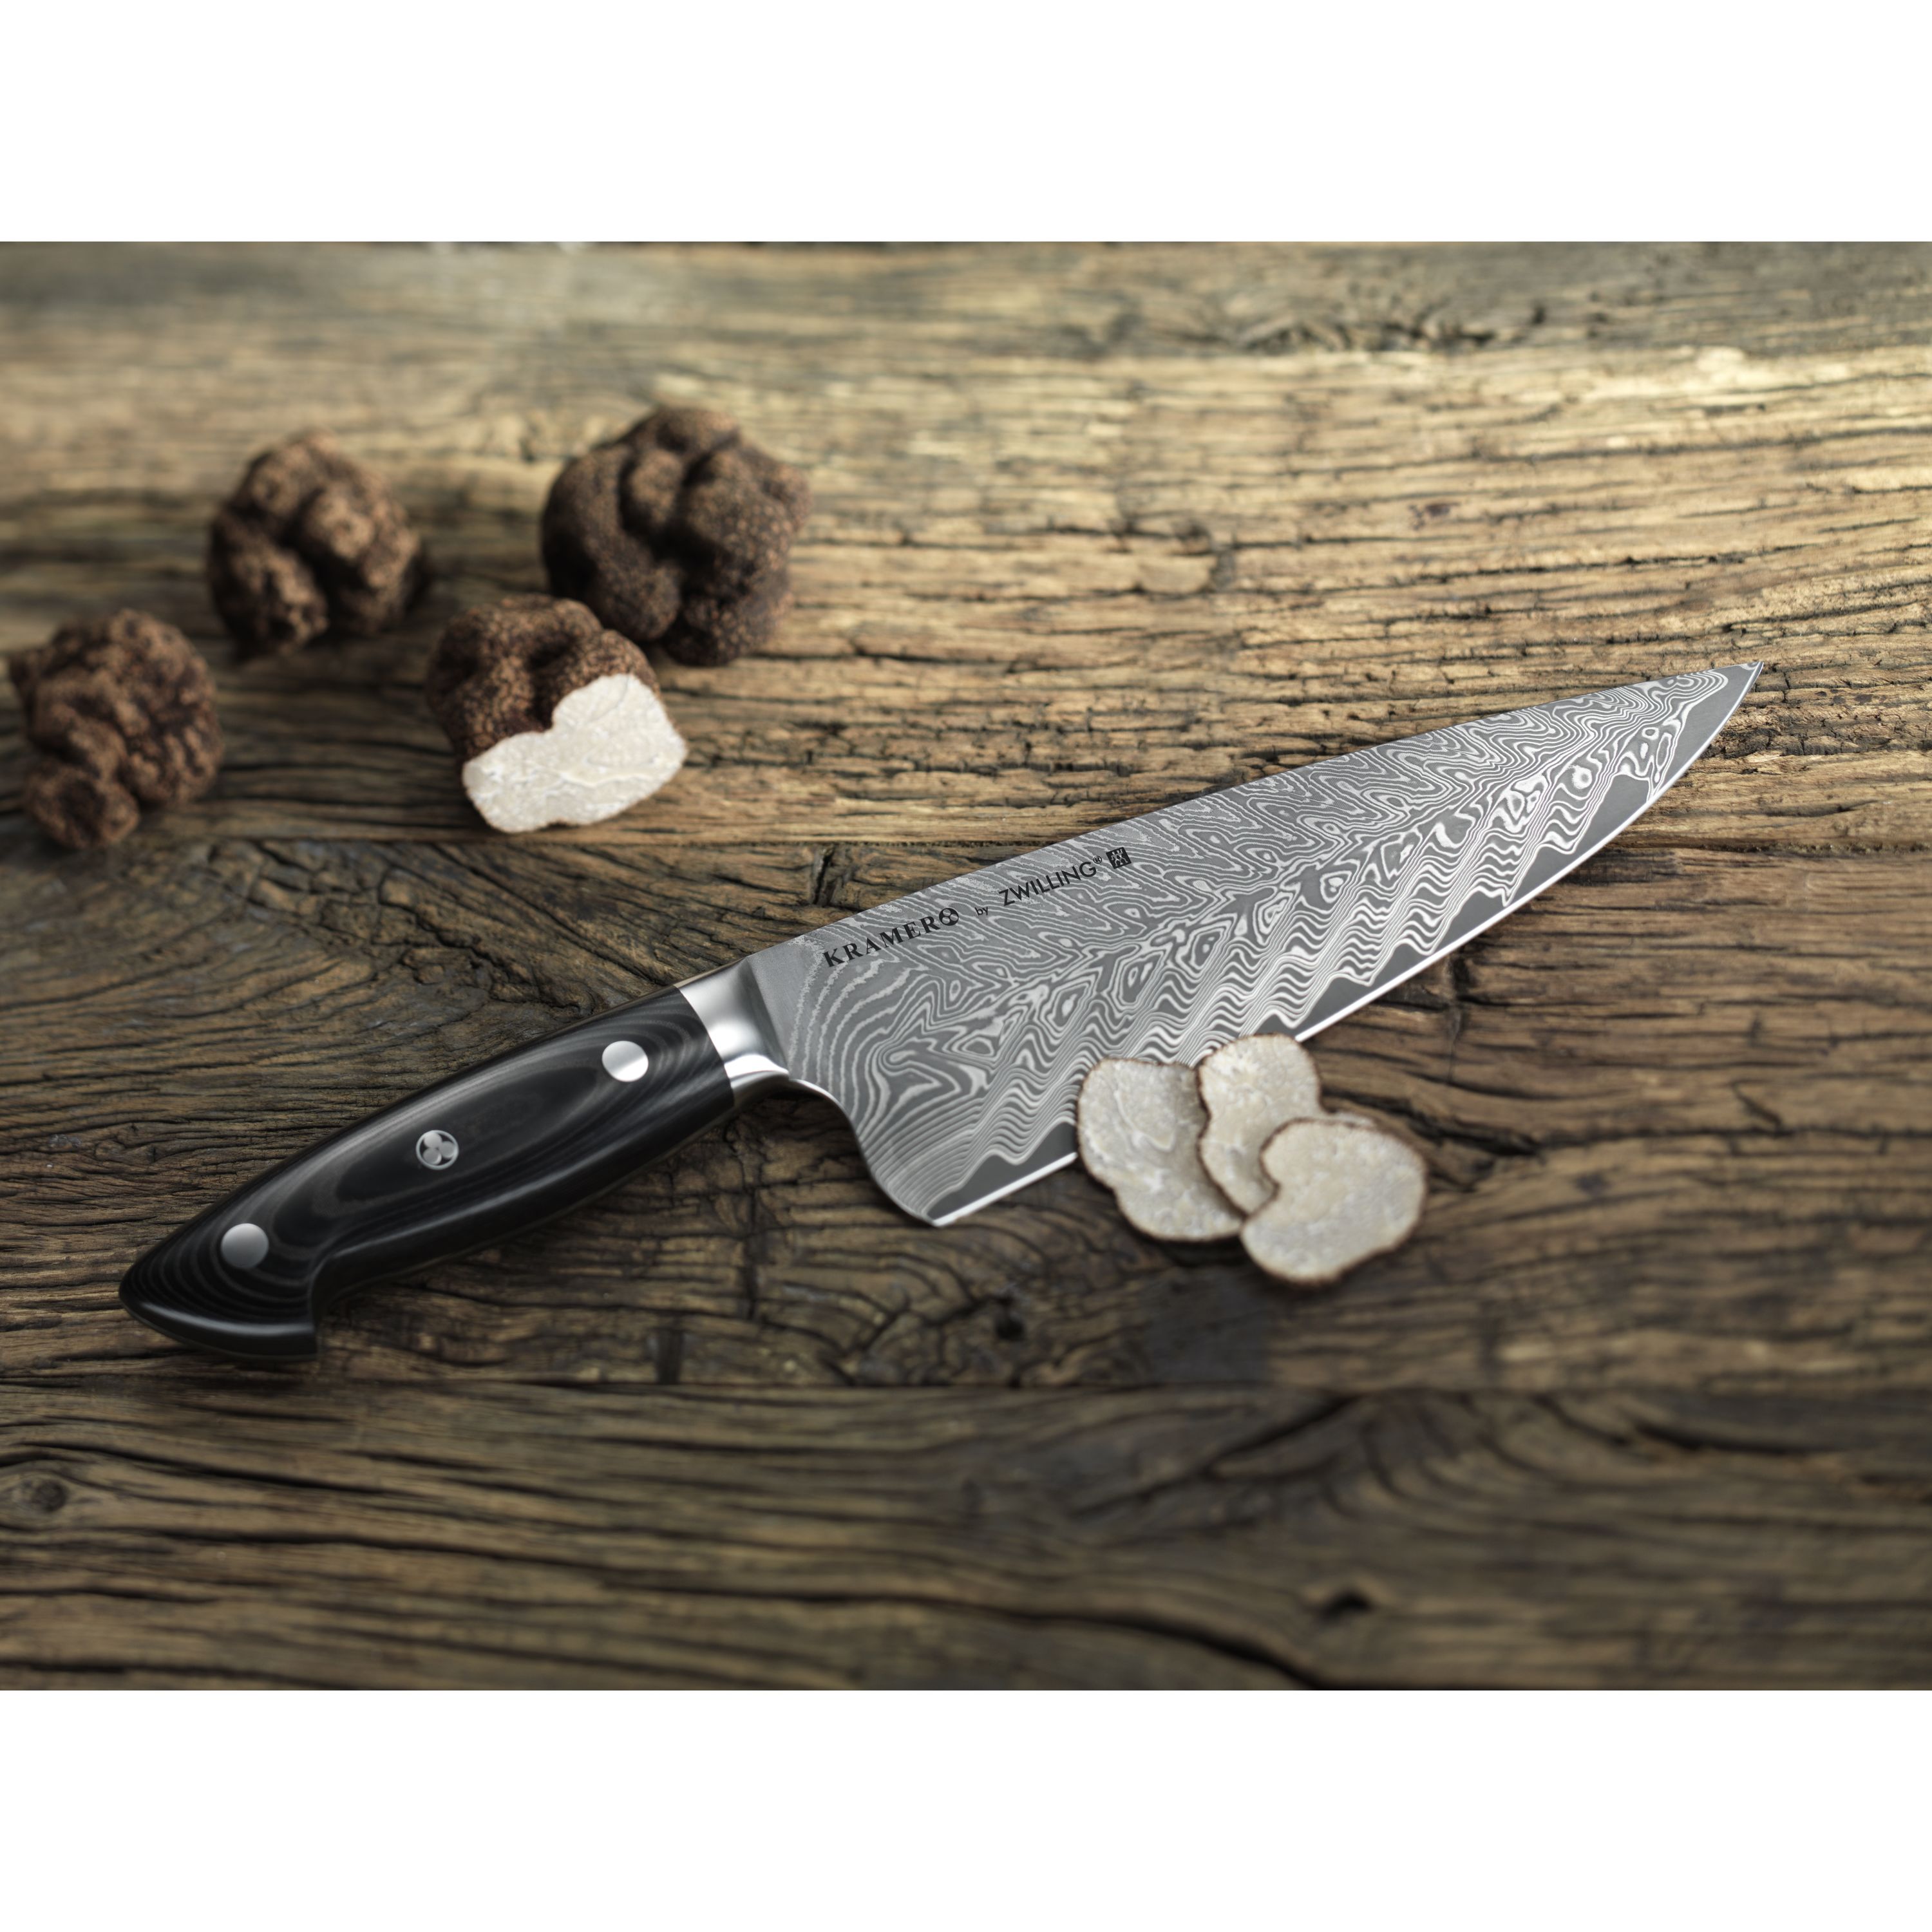 ZWILLING Kramer Euroline Damascus Collection 4-Piece Steak Knives Set